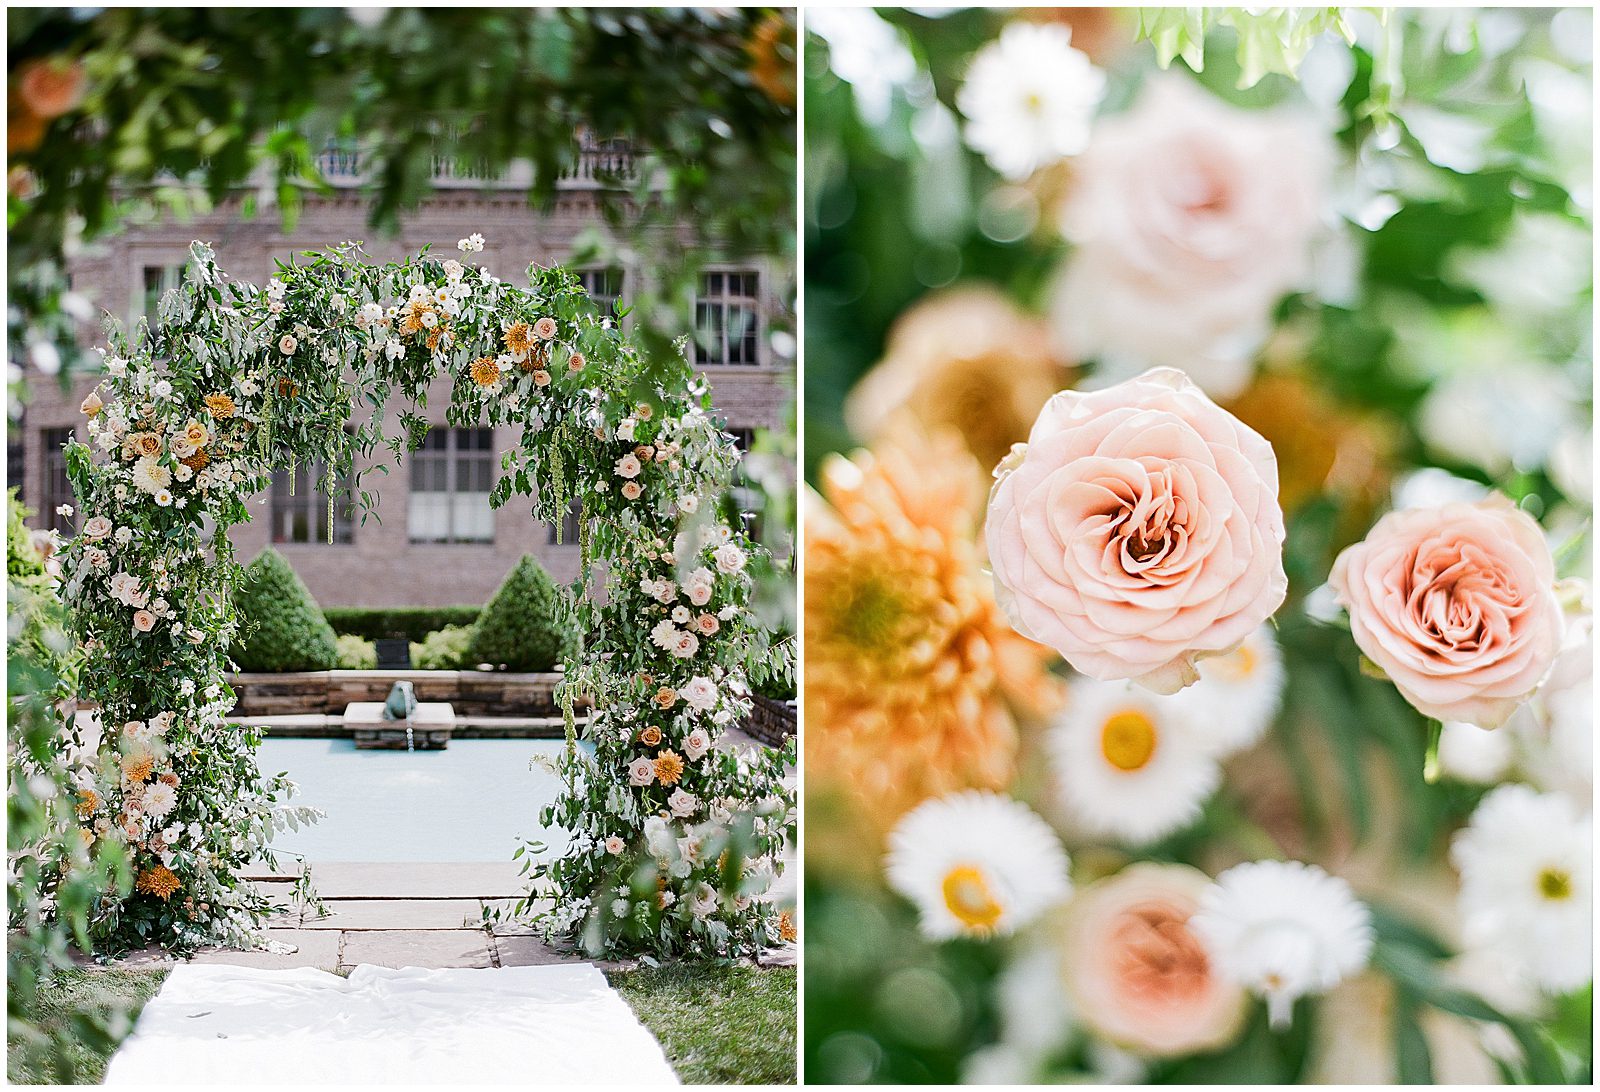 New York City Wedding Venue 620 Loft and Garden Flower Arch Photos